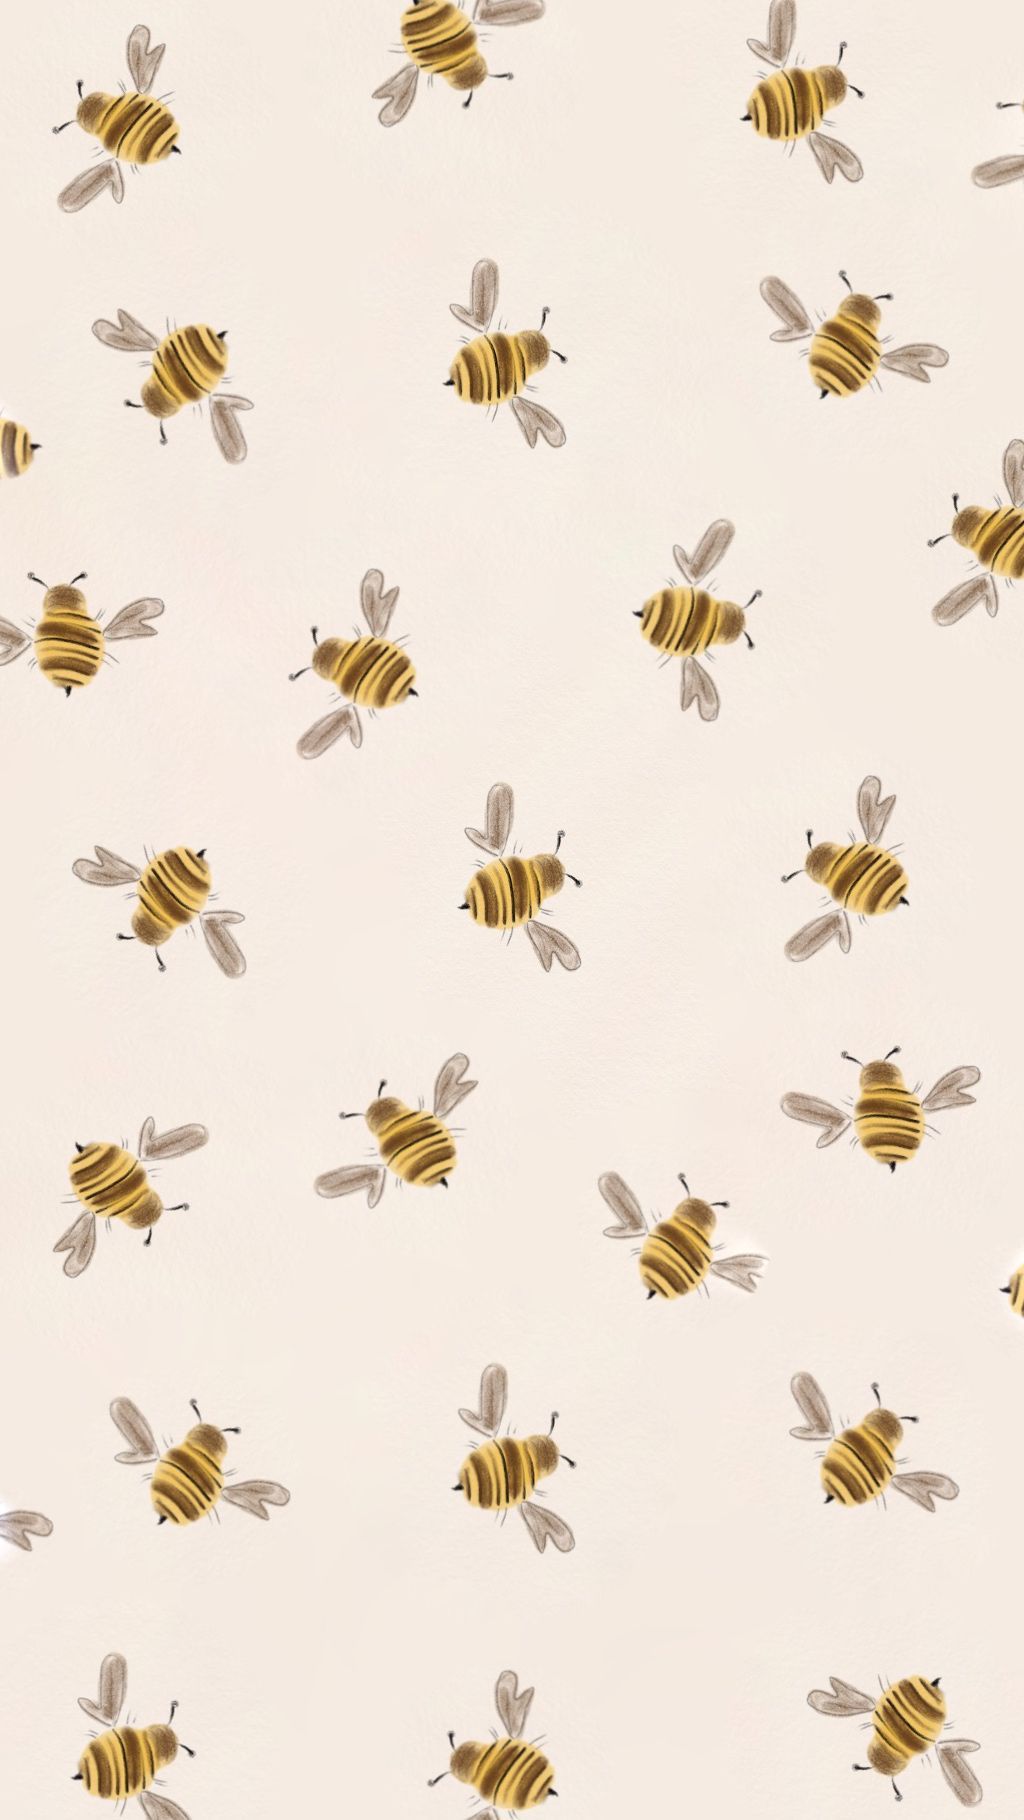 Bee wallpaper. Background phone wallpaper, Phone wallpaper image, iPhone background wallpaper